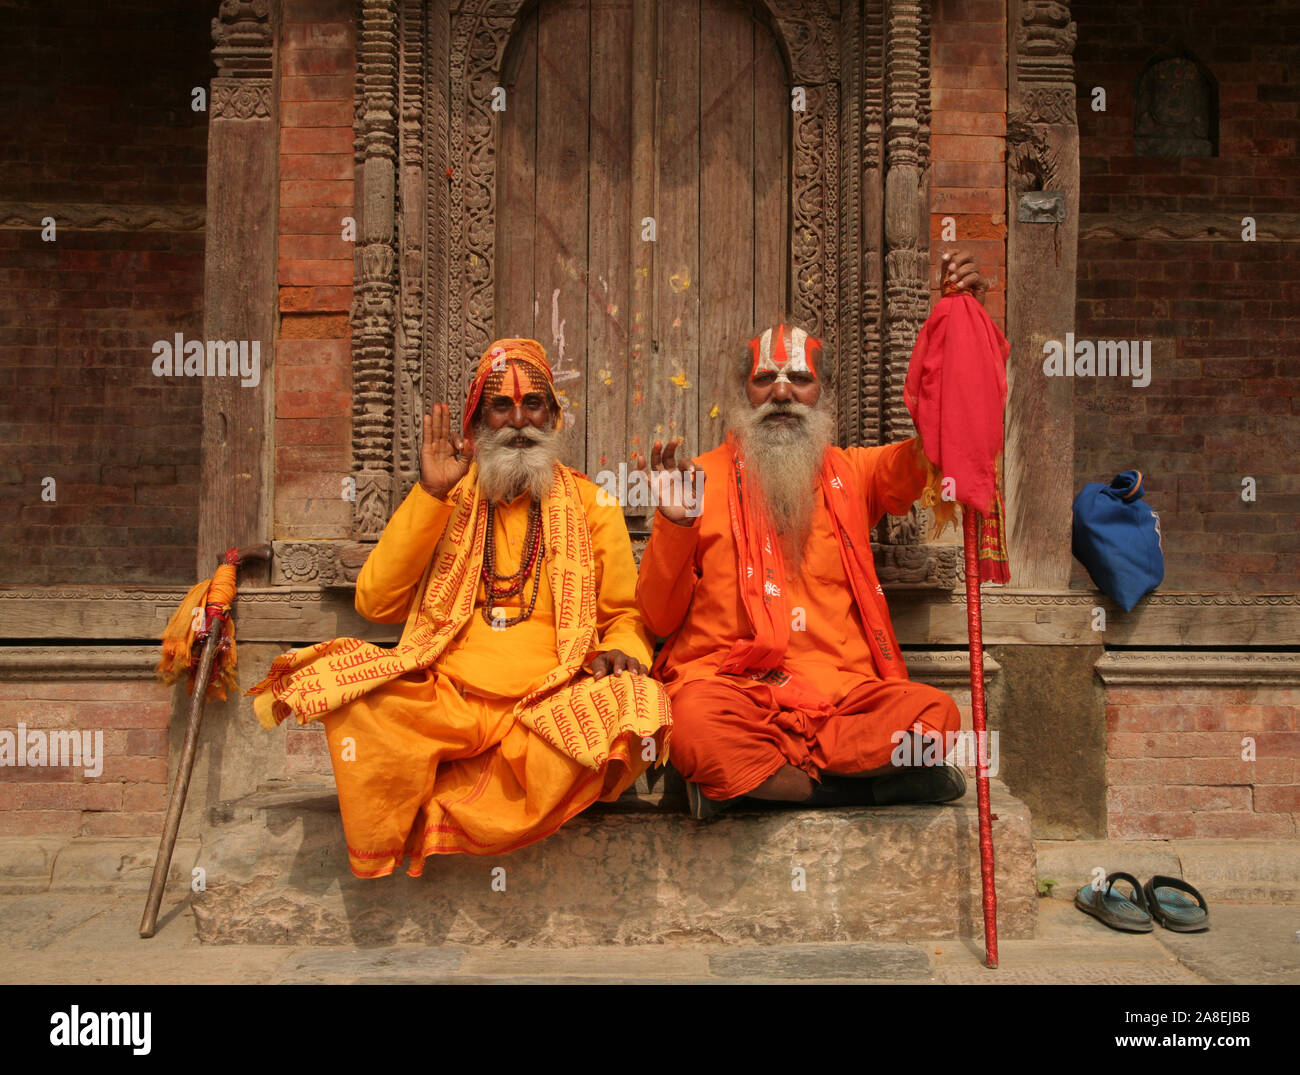 Sadhus or Holy Men, Durbar Square, Kathmandu, Nepal Stock Photo